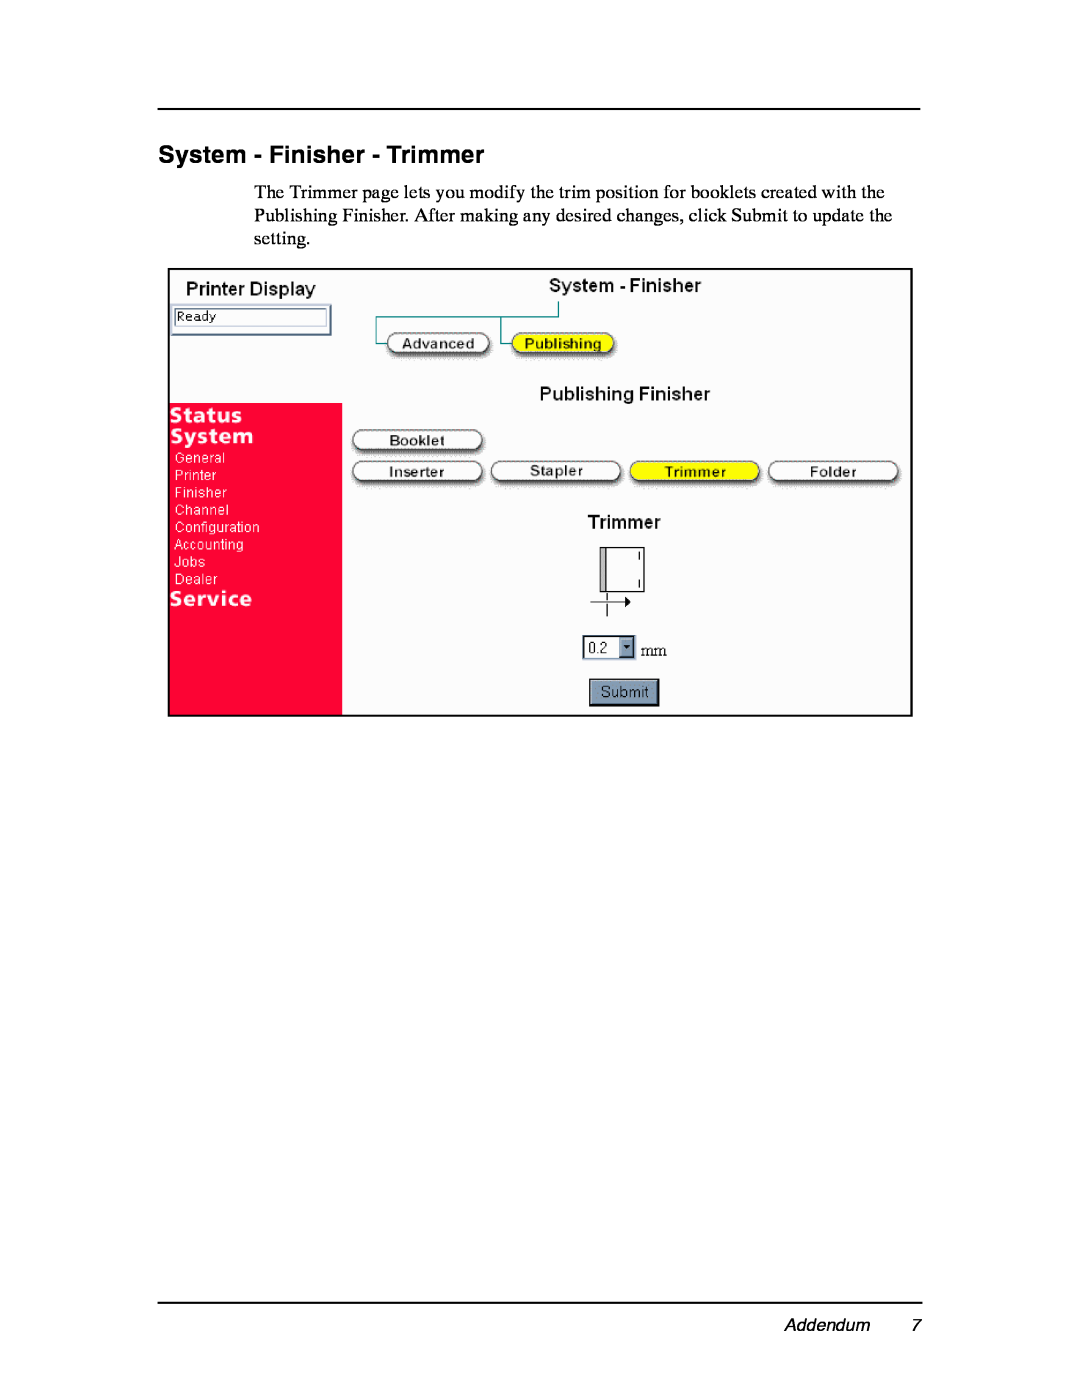 Ricoh DDP 184 manual System - Finisher - Trimmer, Addendum 